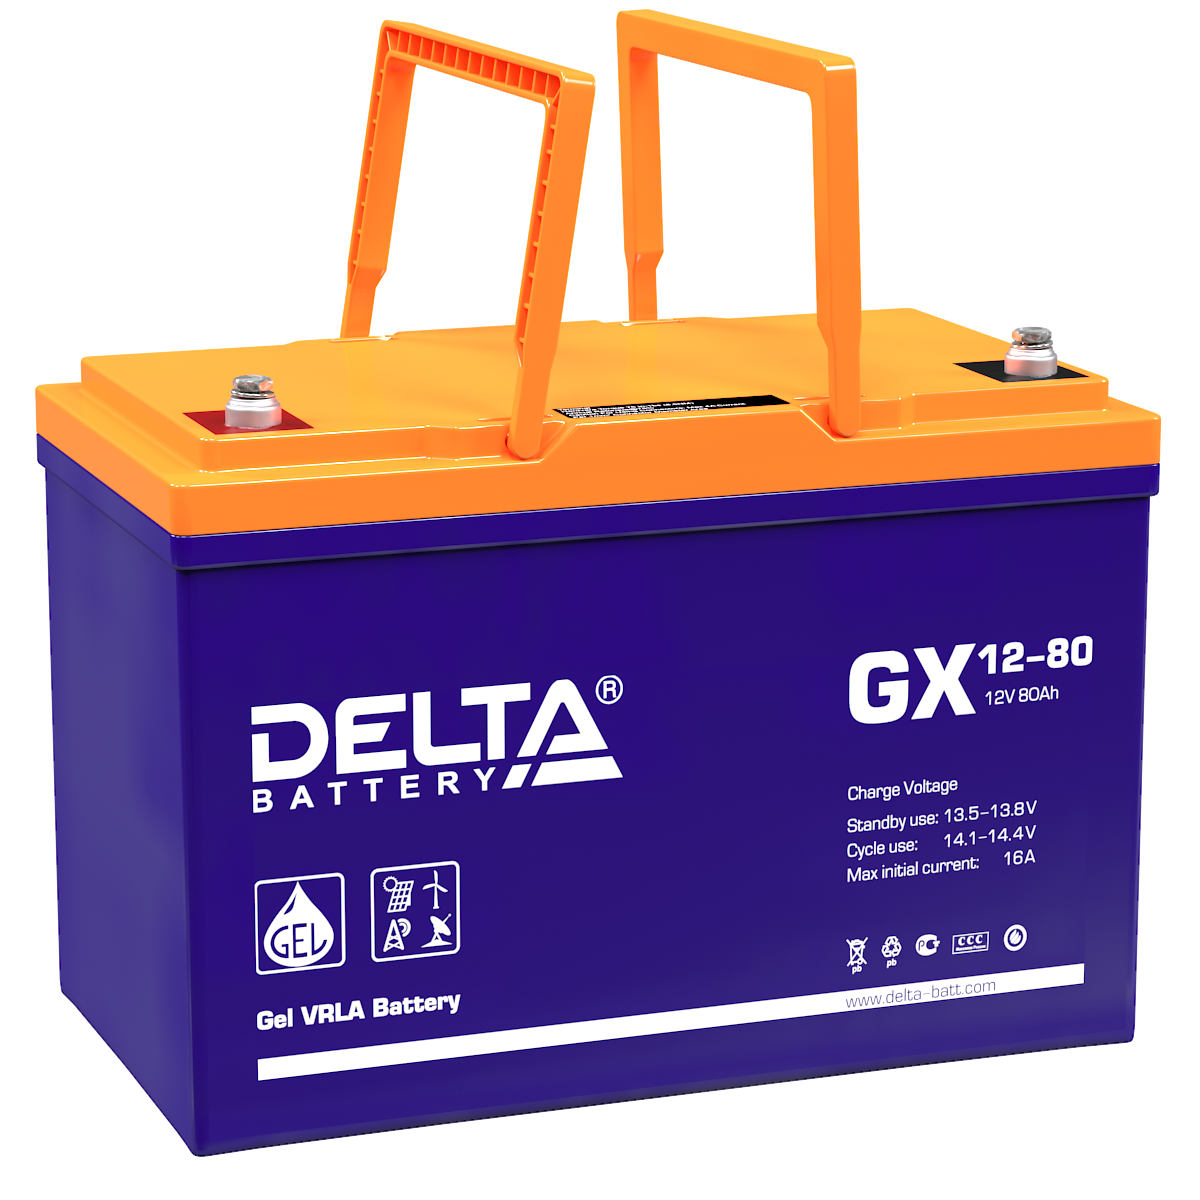 Аккумулятор DELTA GX 12-90